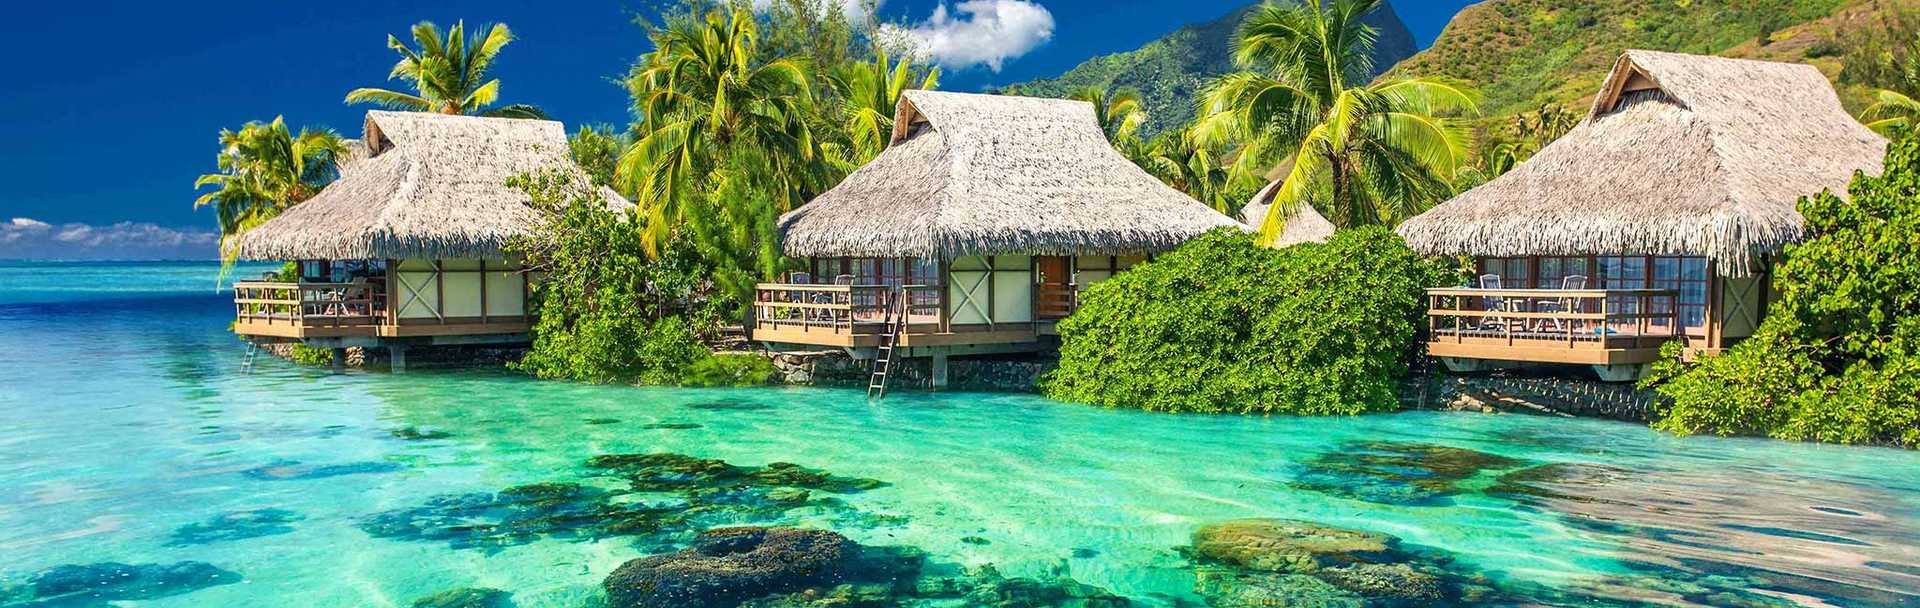 Fiji Tour - Houses on the ocean